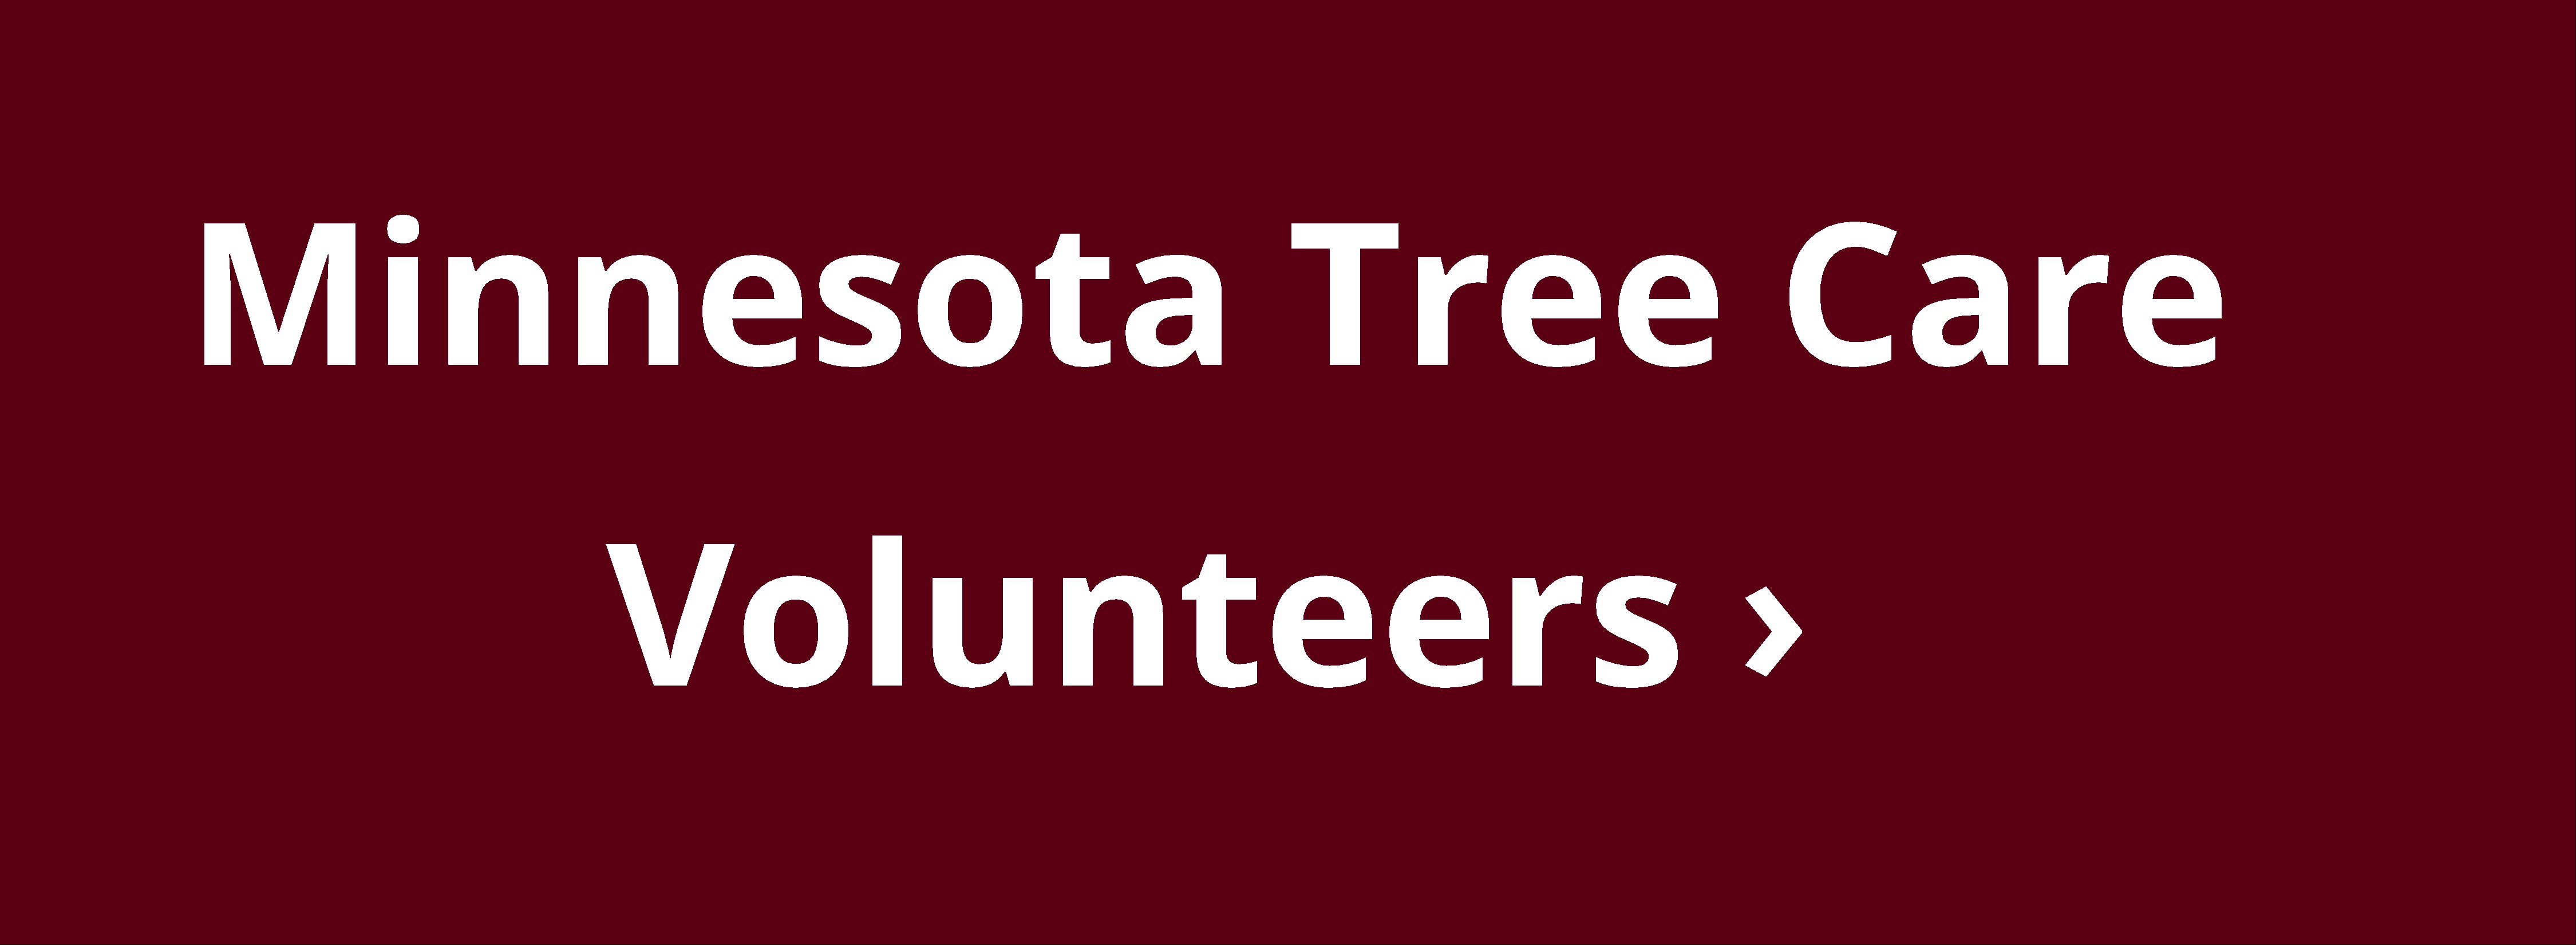 Minnesota Tree Care Volunteers button